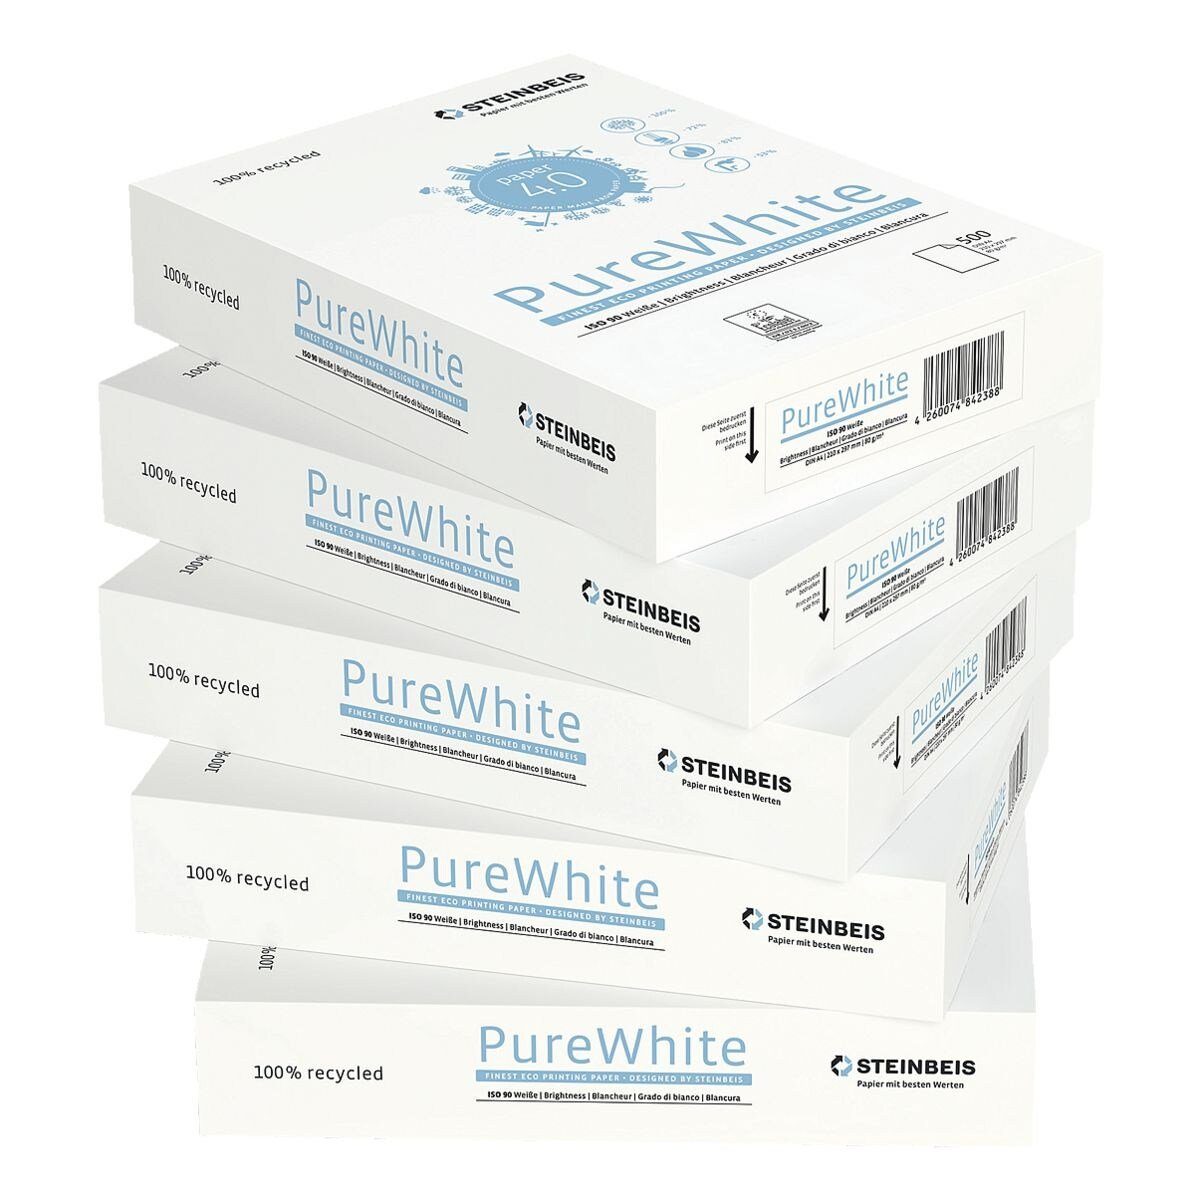 Format DIN Pure g/m², White, 500 80 CIE, A4, Recyclingpapier STEINBEIS 90 Blatt